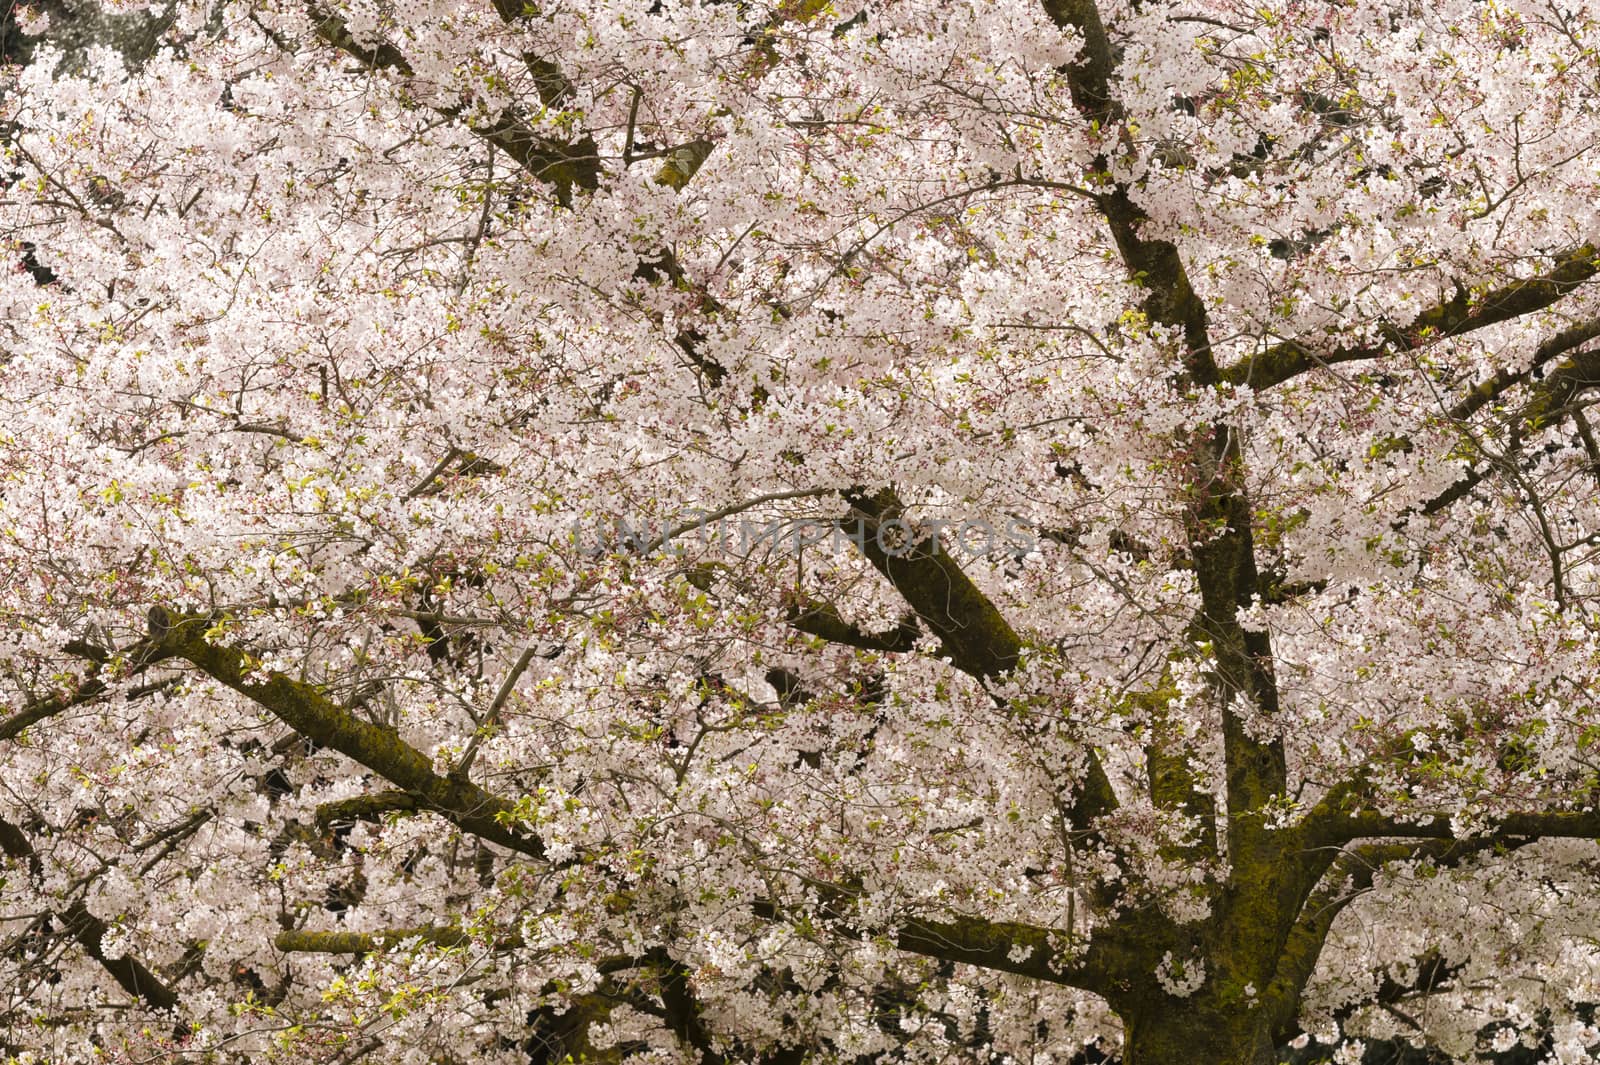 Cherry blossom flowers in full bloom in Spring